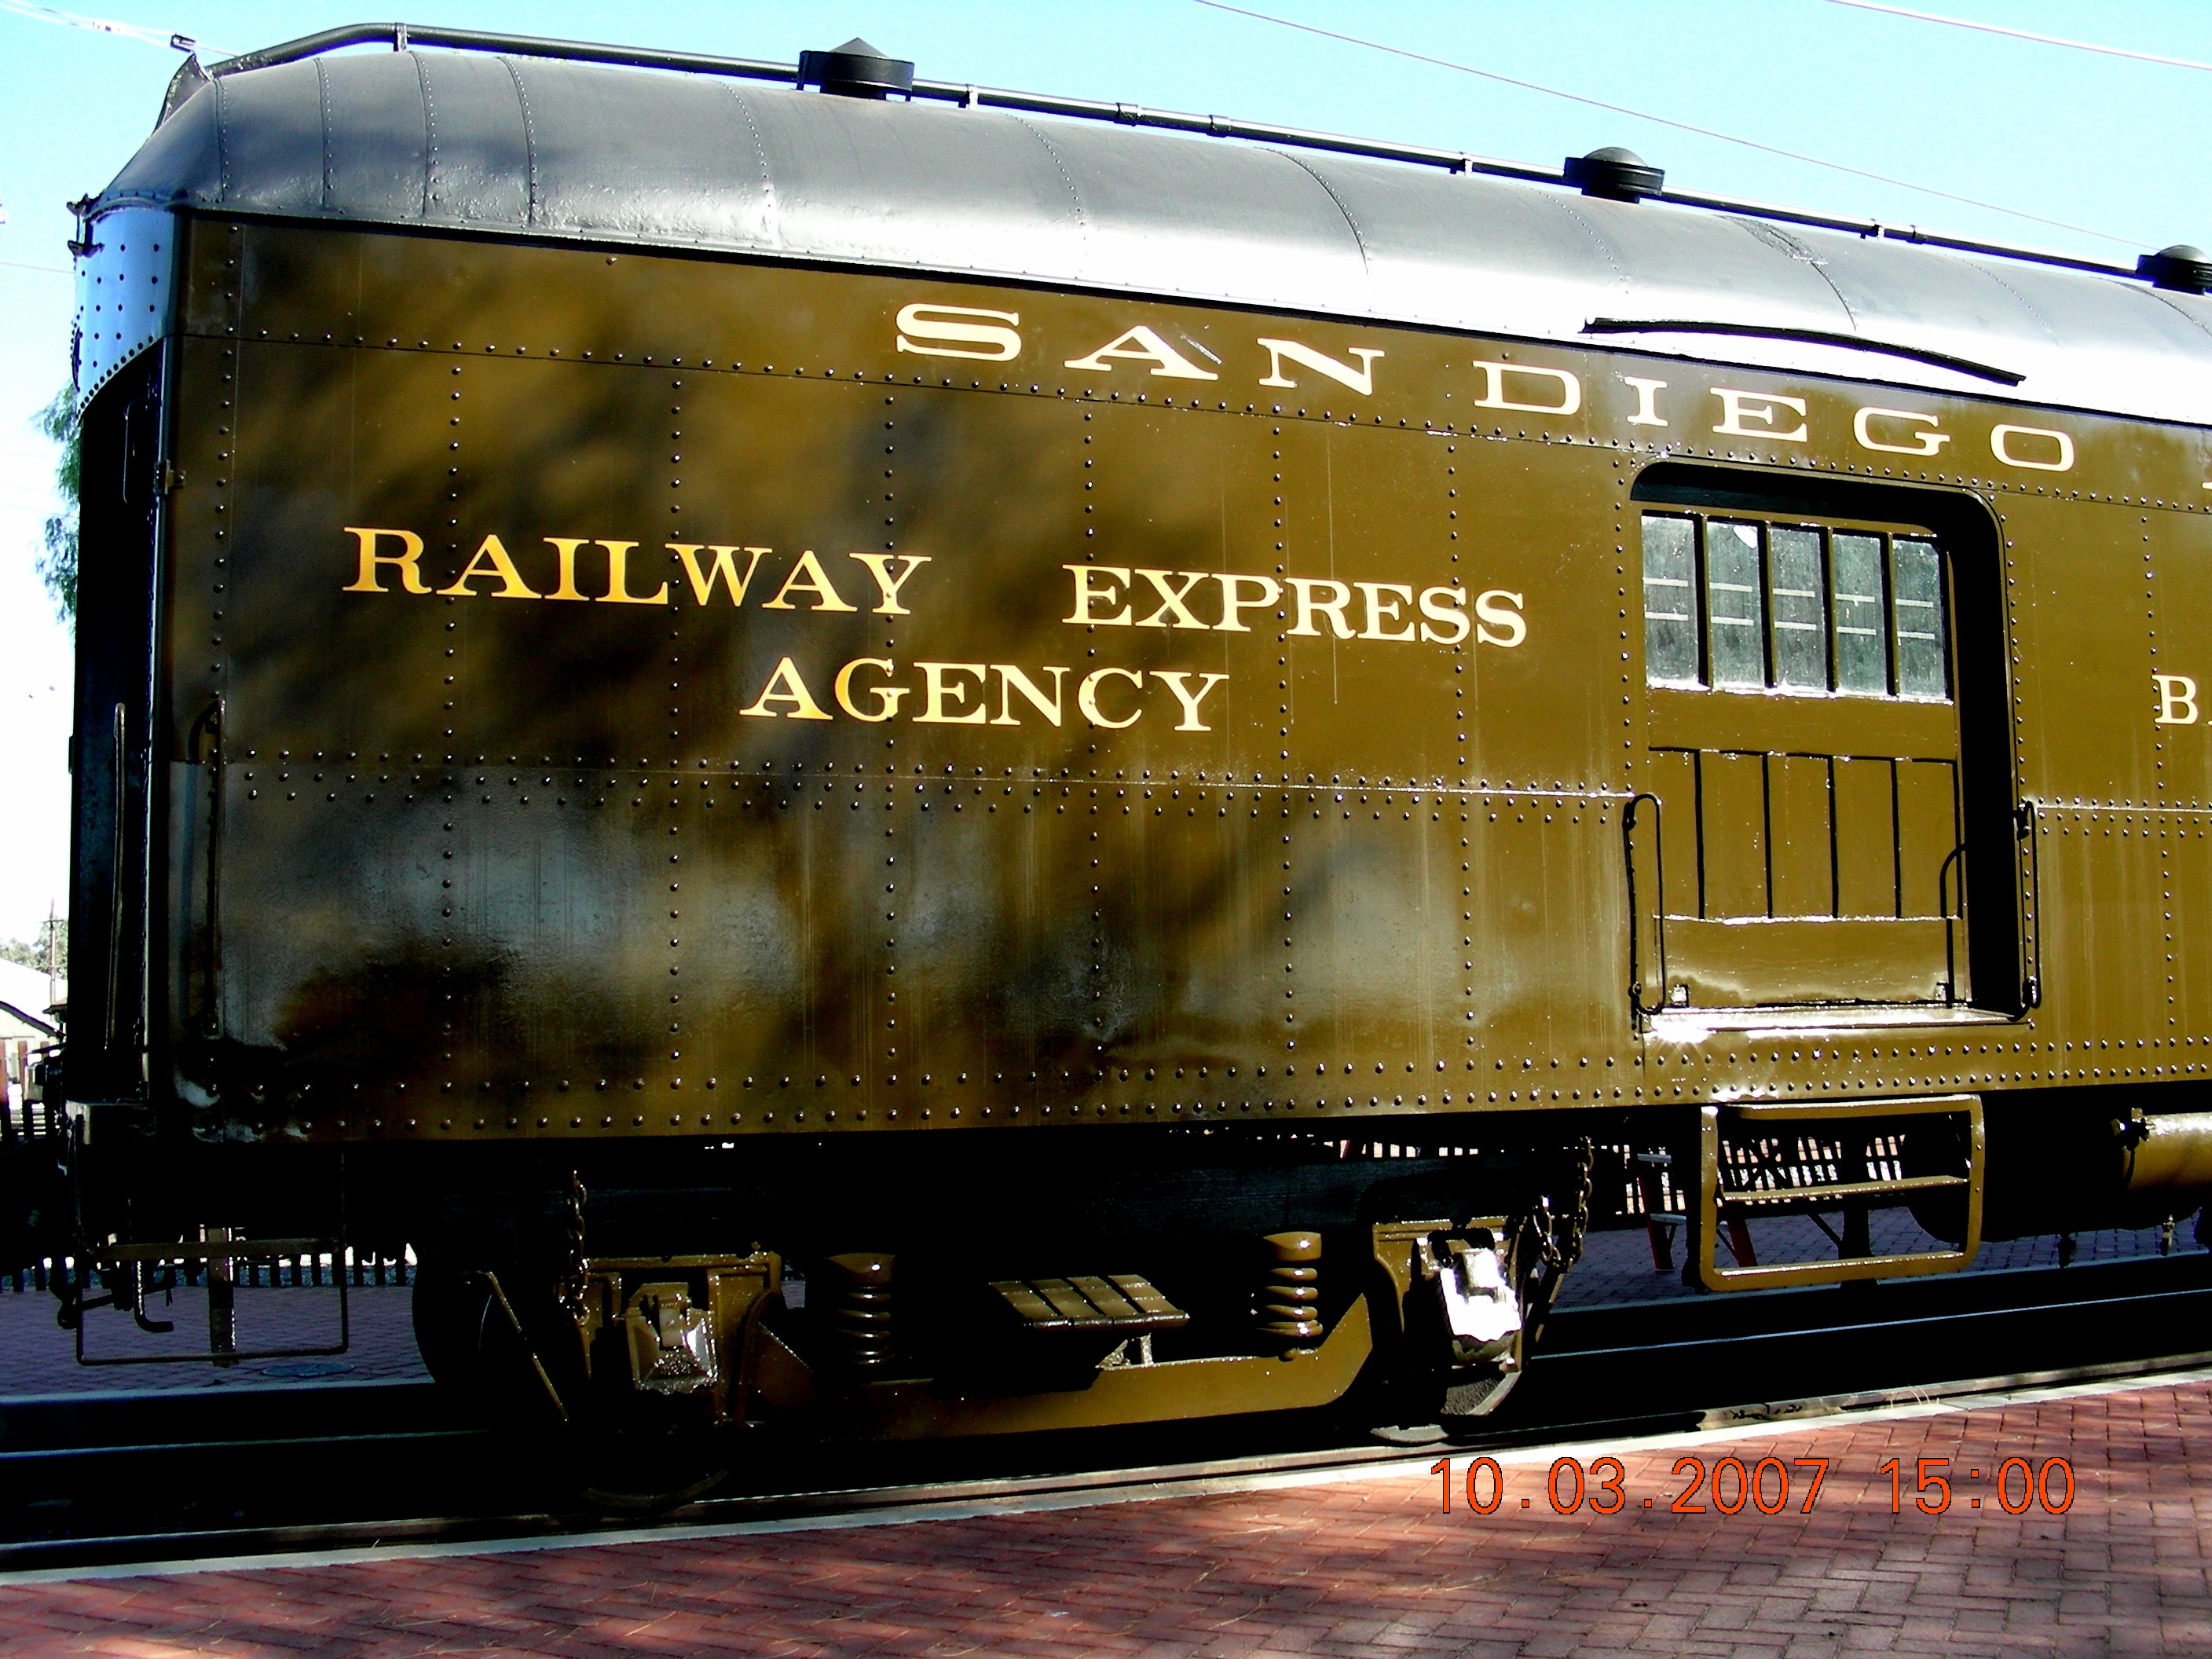 Antique restored train. Hand-lettering,